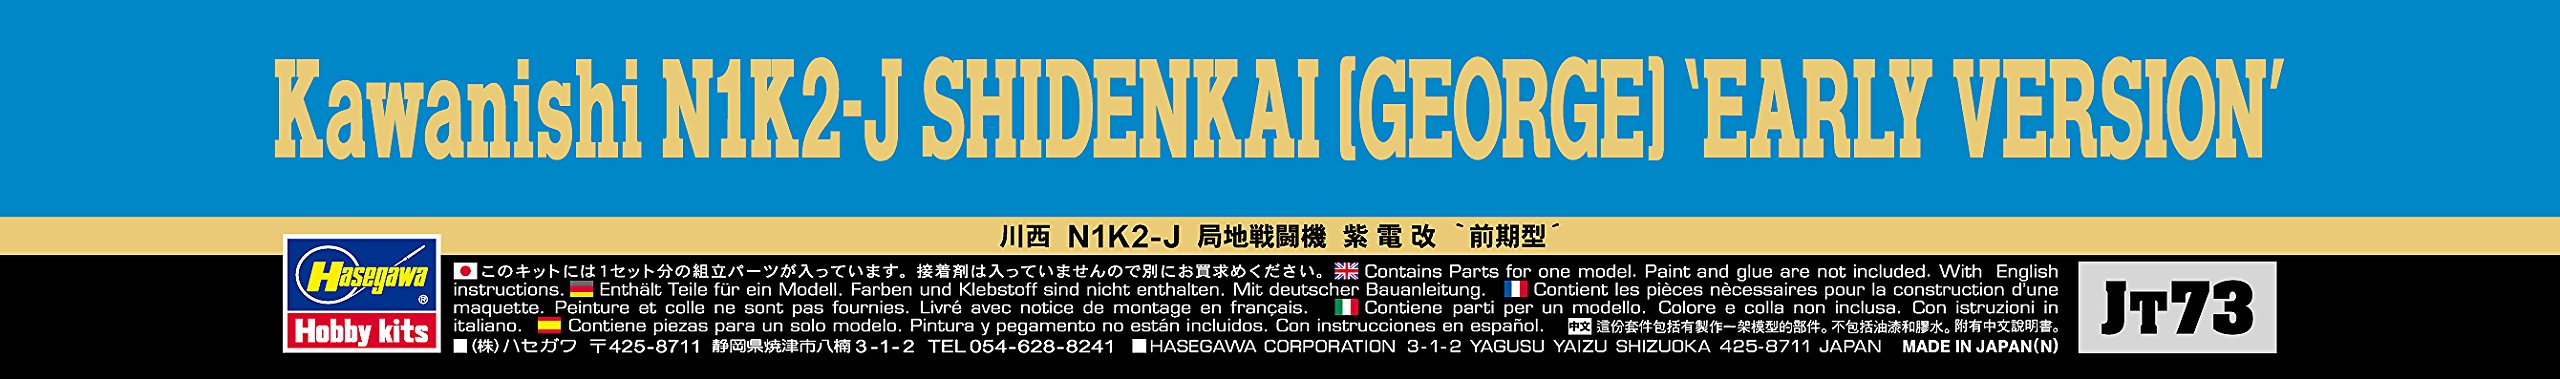 HASEGAWA 1/48 Kawanishi N1K2 Shidenkai George 'Early Version' Plastic Model